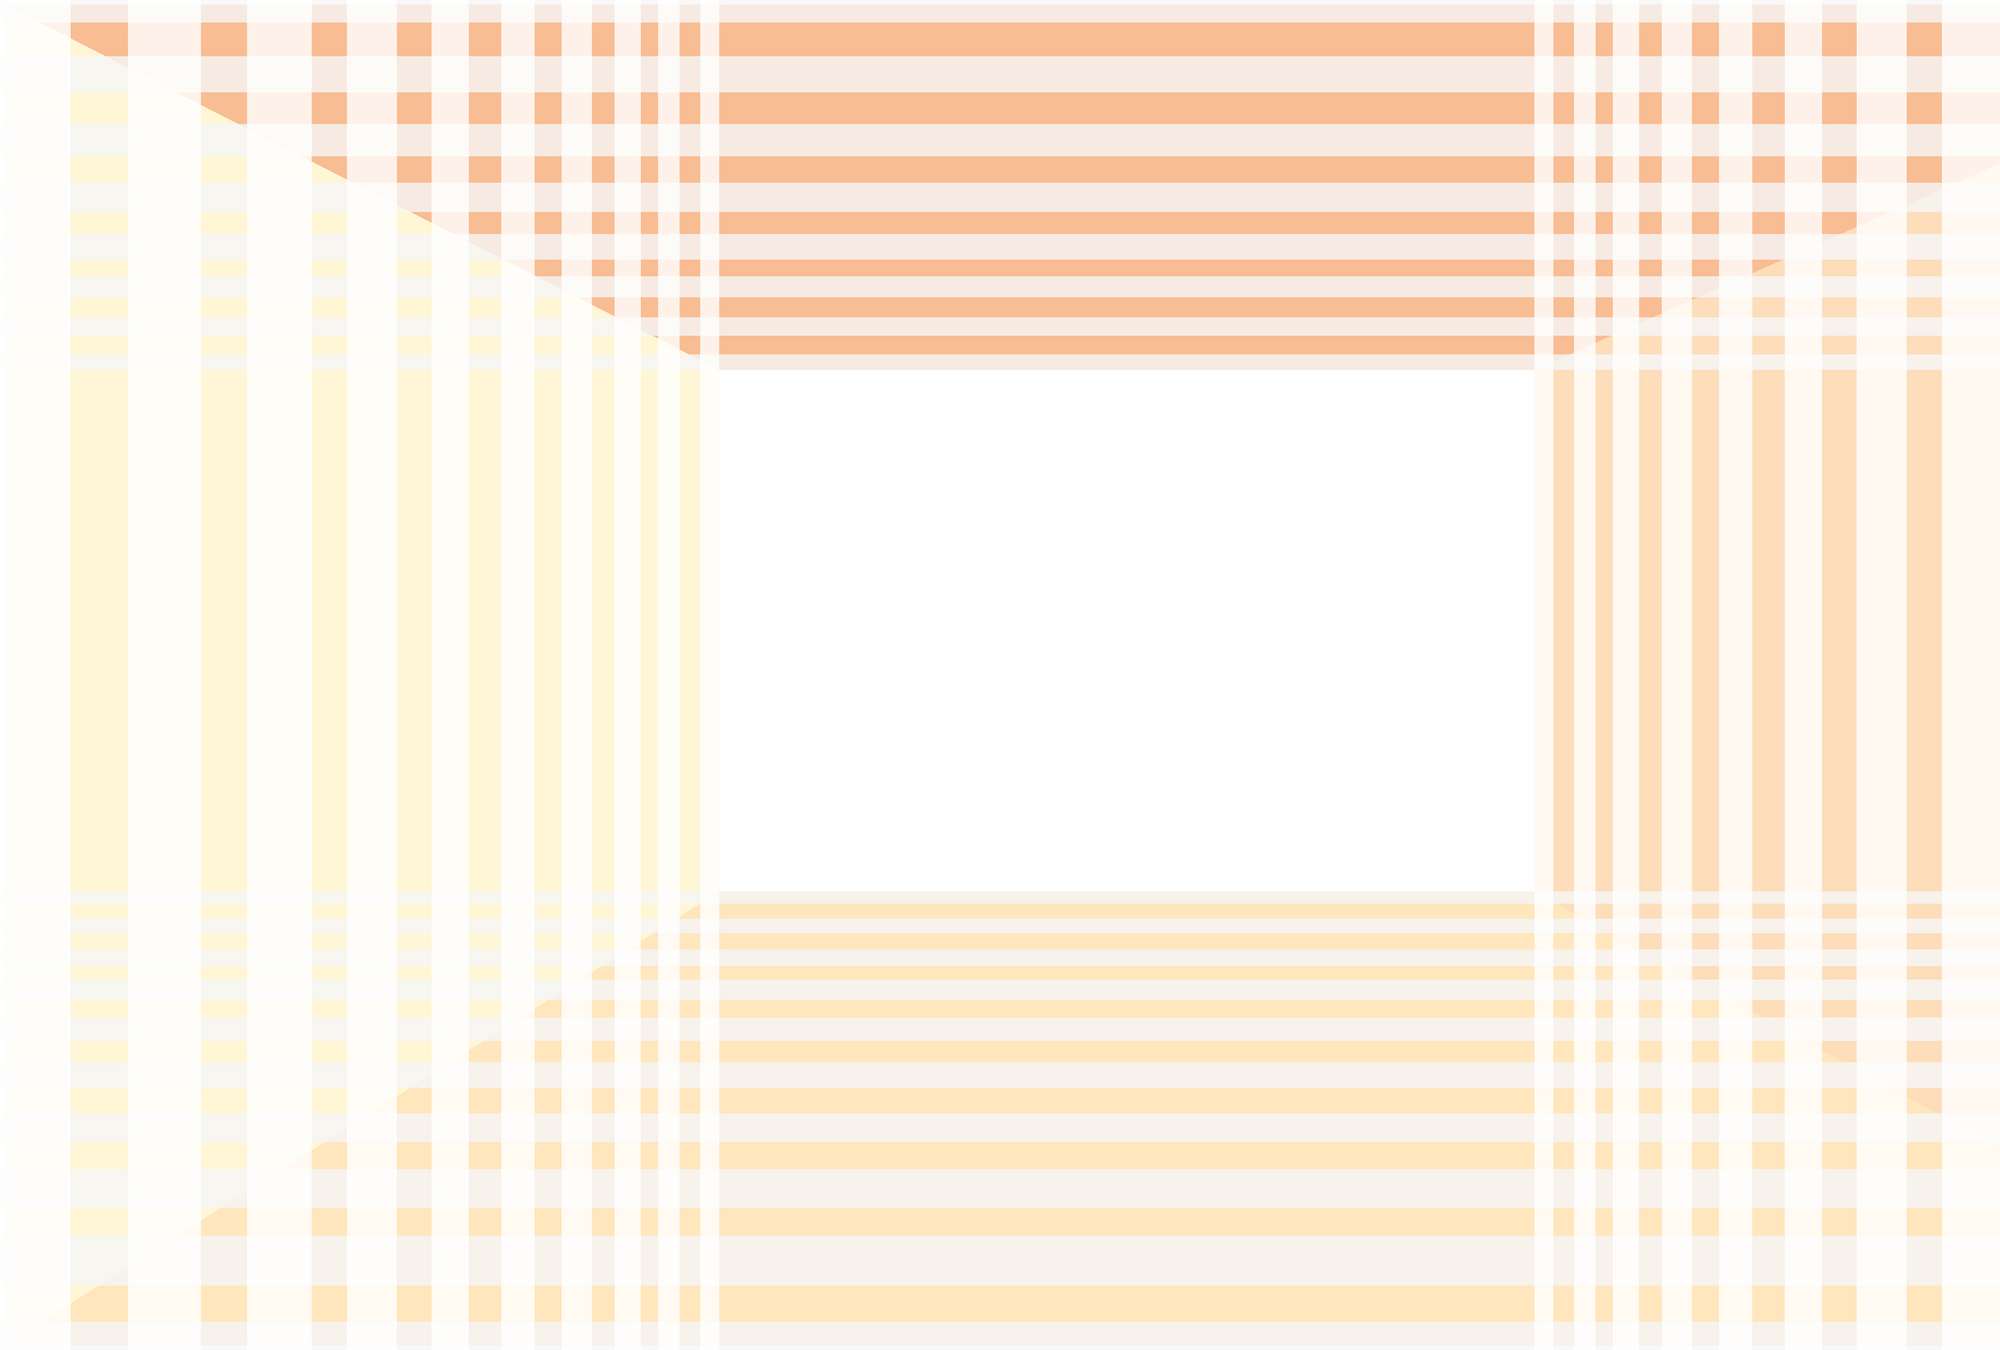             Papier peint moderne à rayures simples - orange, blanc, jaune
        